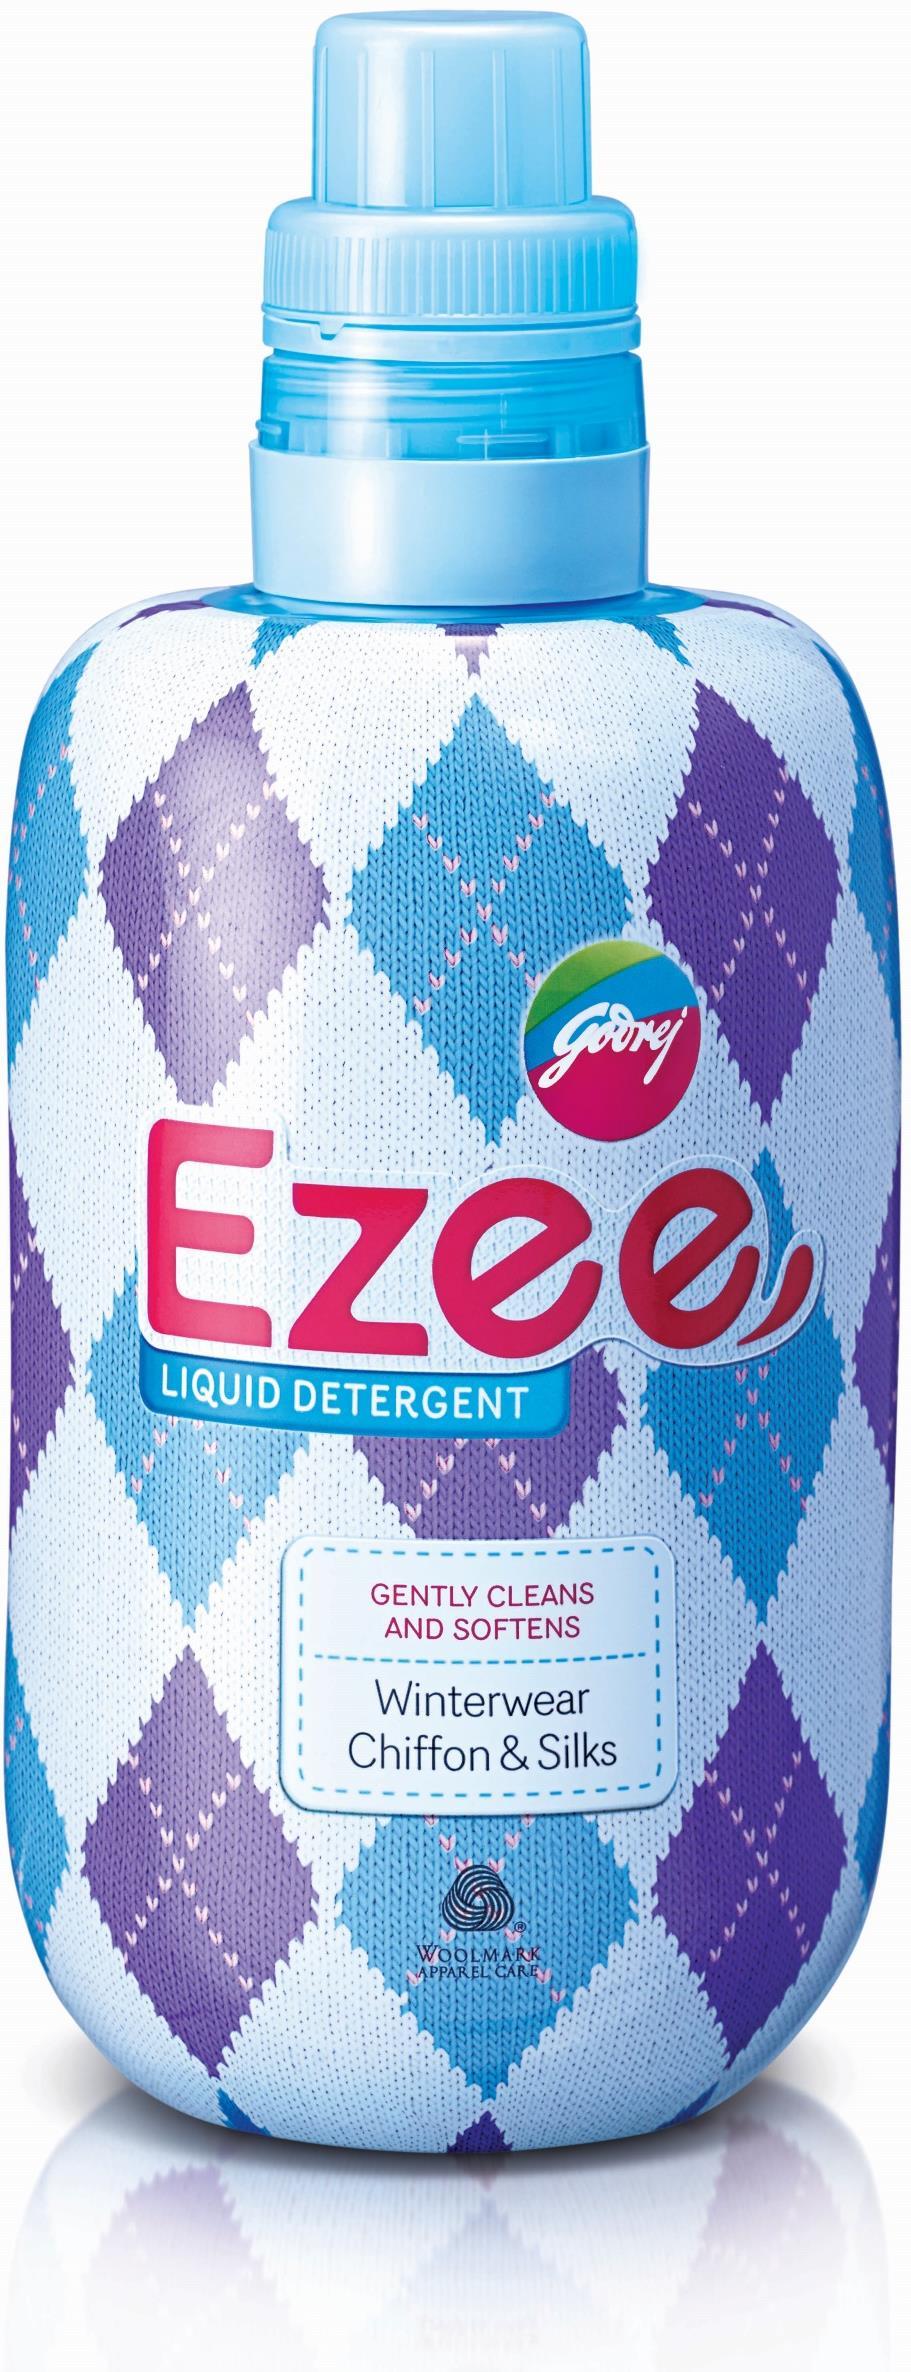 LIQUID DETERGENTS DELIVERS DOUBLE-DIGIT GROWTH - Liquid Detergents sees strong growth of 21% led by Ezee - Growth led by double-digit volume growth - Price